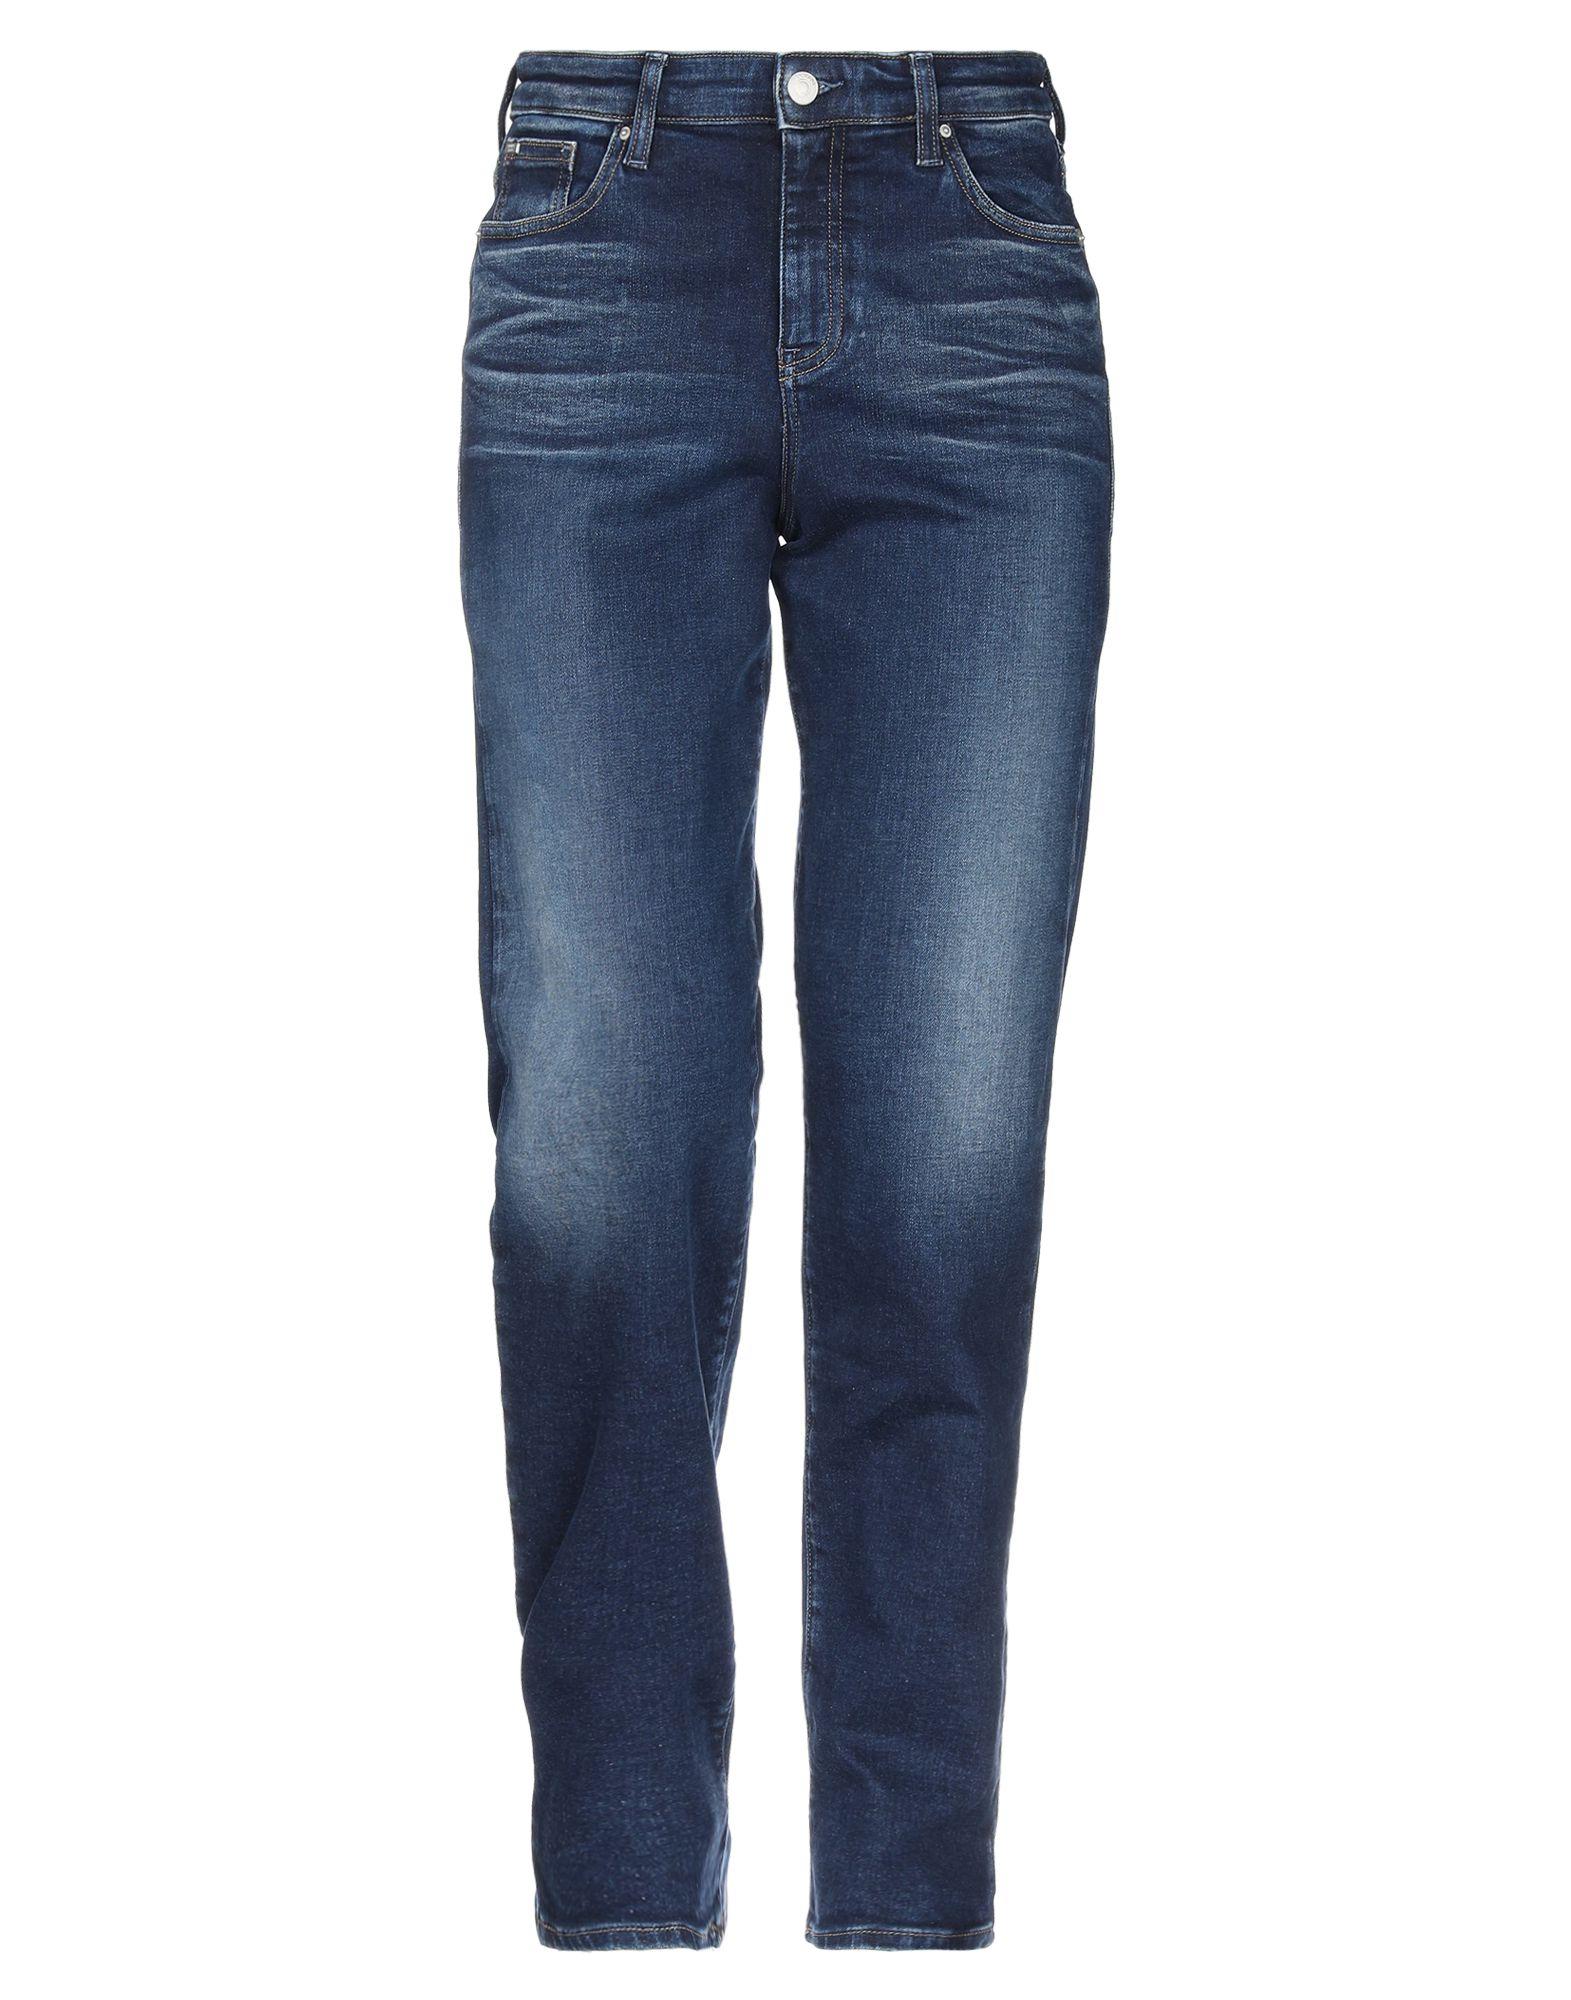 Armani Jeans Denim Pants in Blue - Lyst